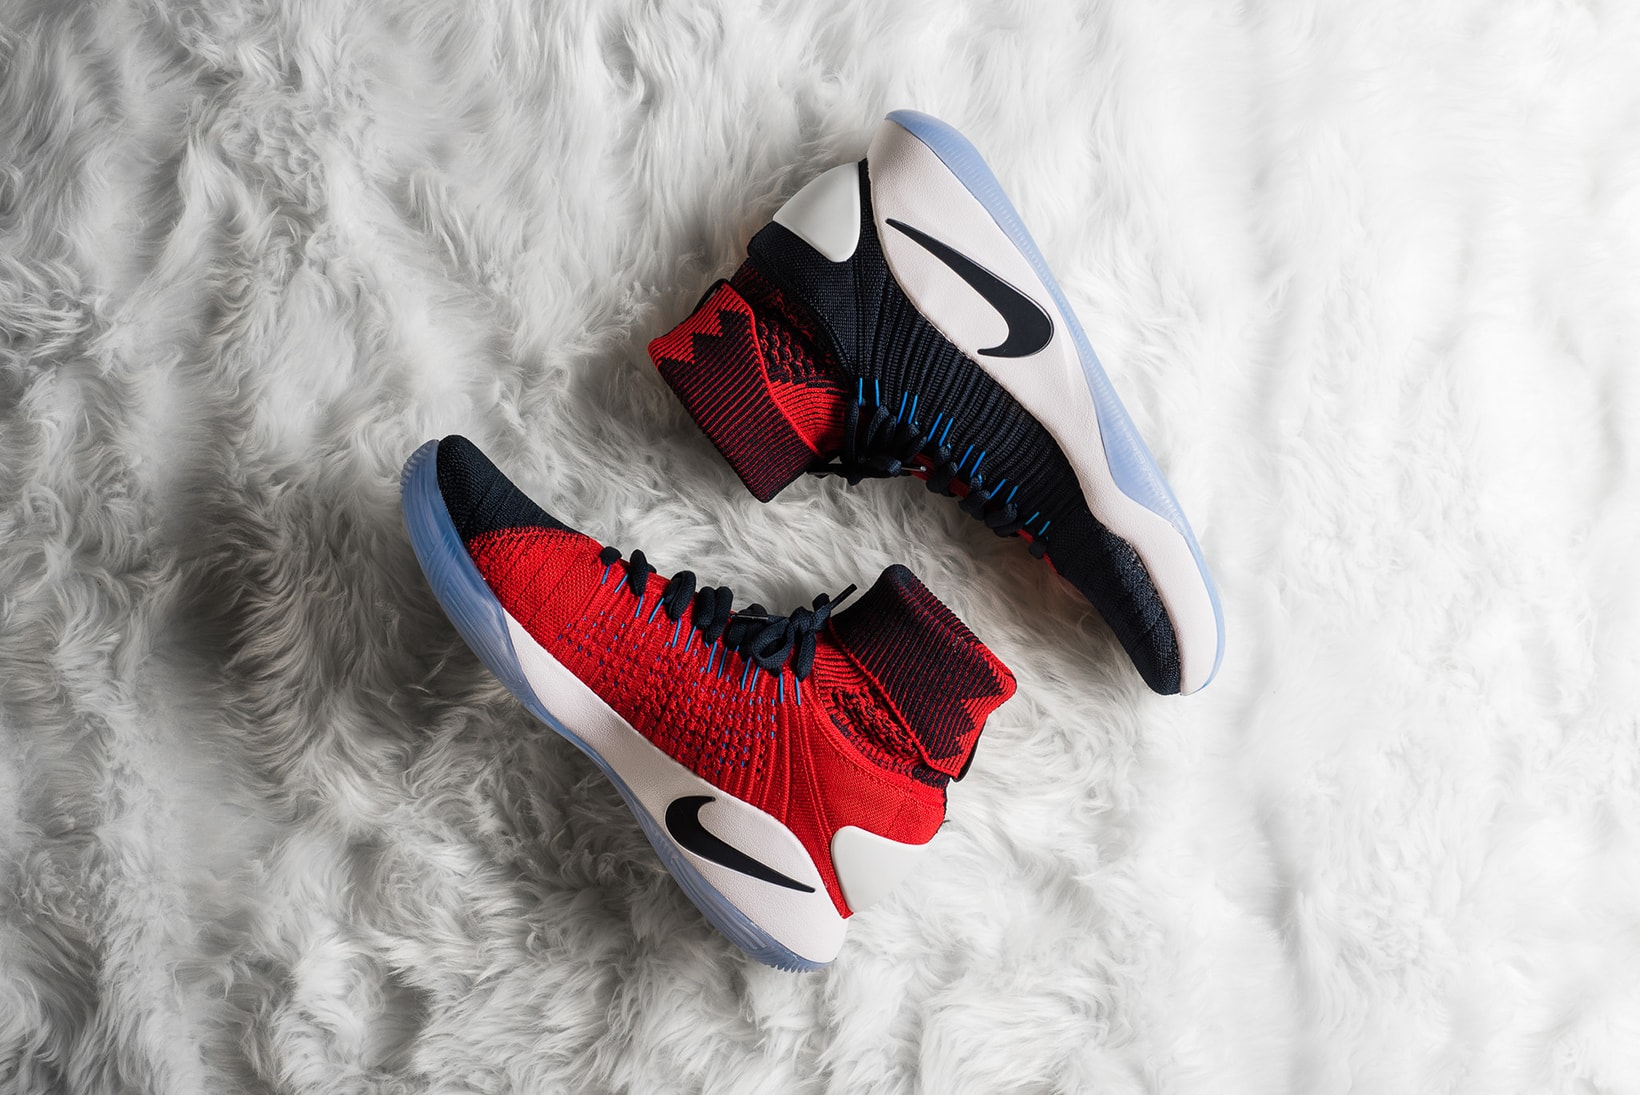 Nike Hyperdunk 2016 in Dark Obsidian and Crimson Sneaker |